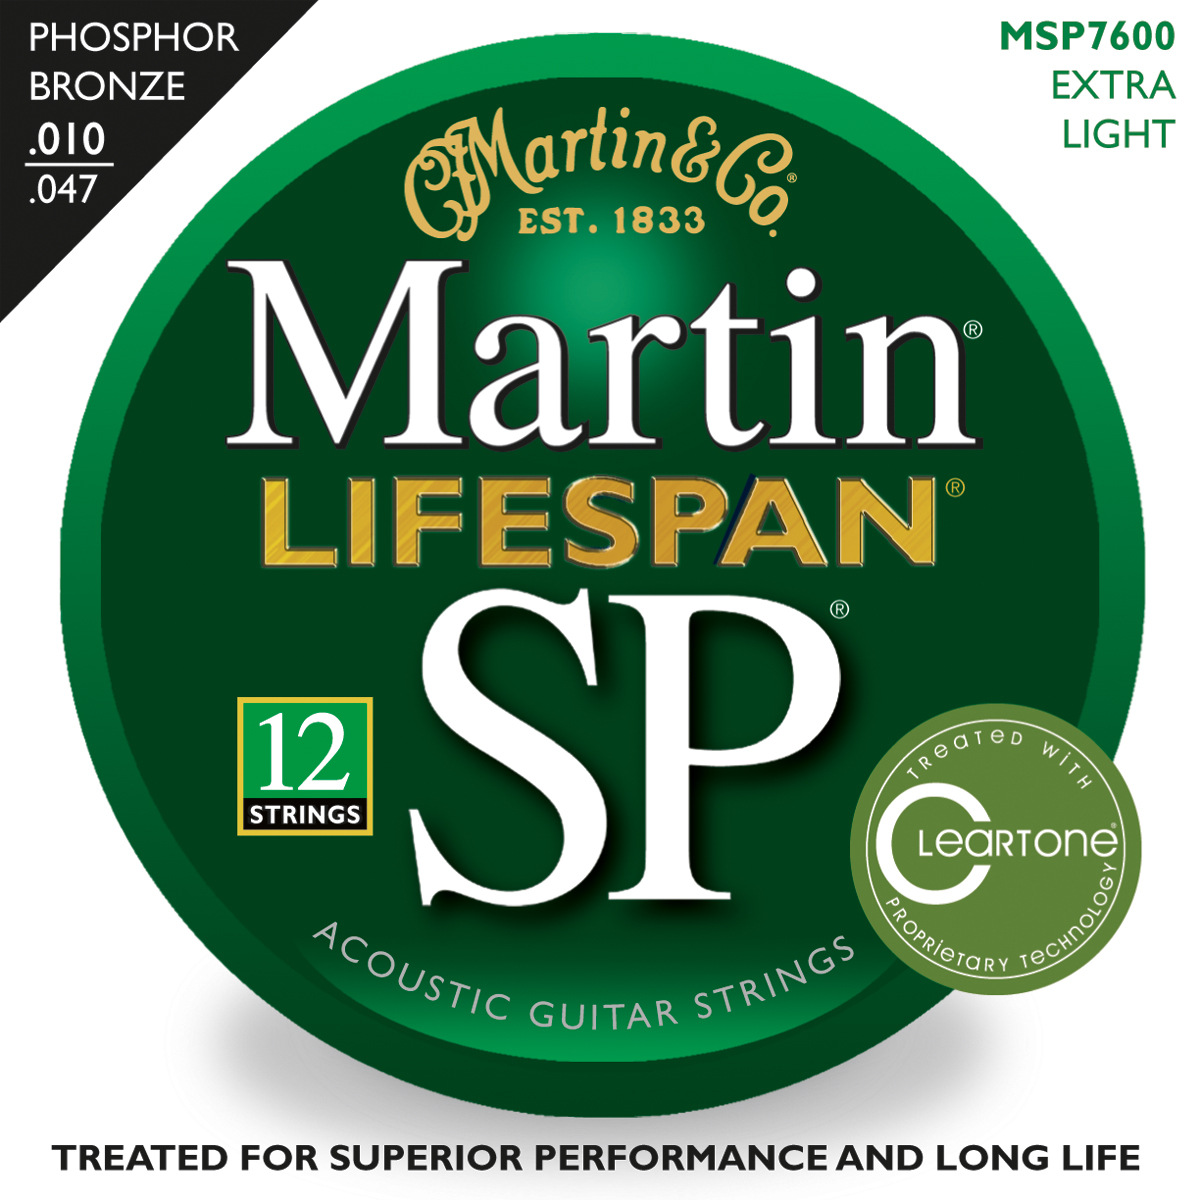 Martin Martin SP Lifespan Bronze Acoustic Guitar Strings, 12-String